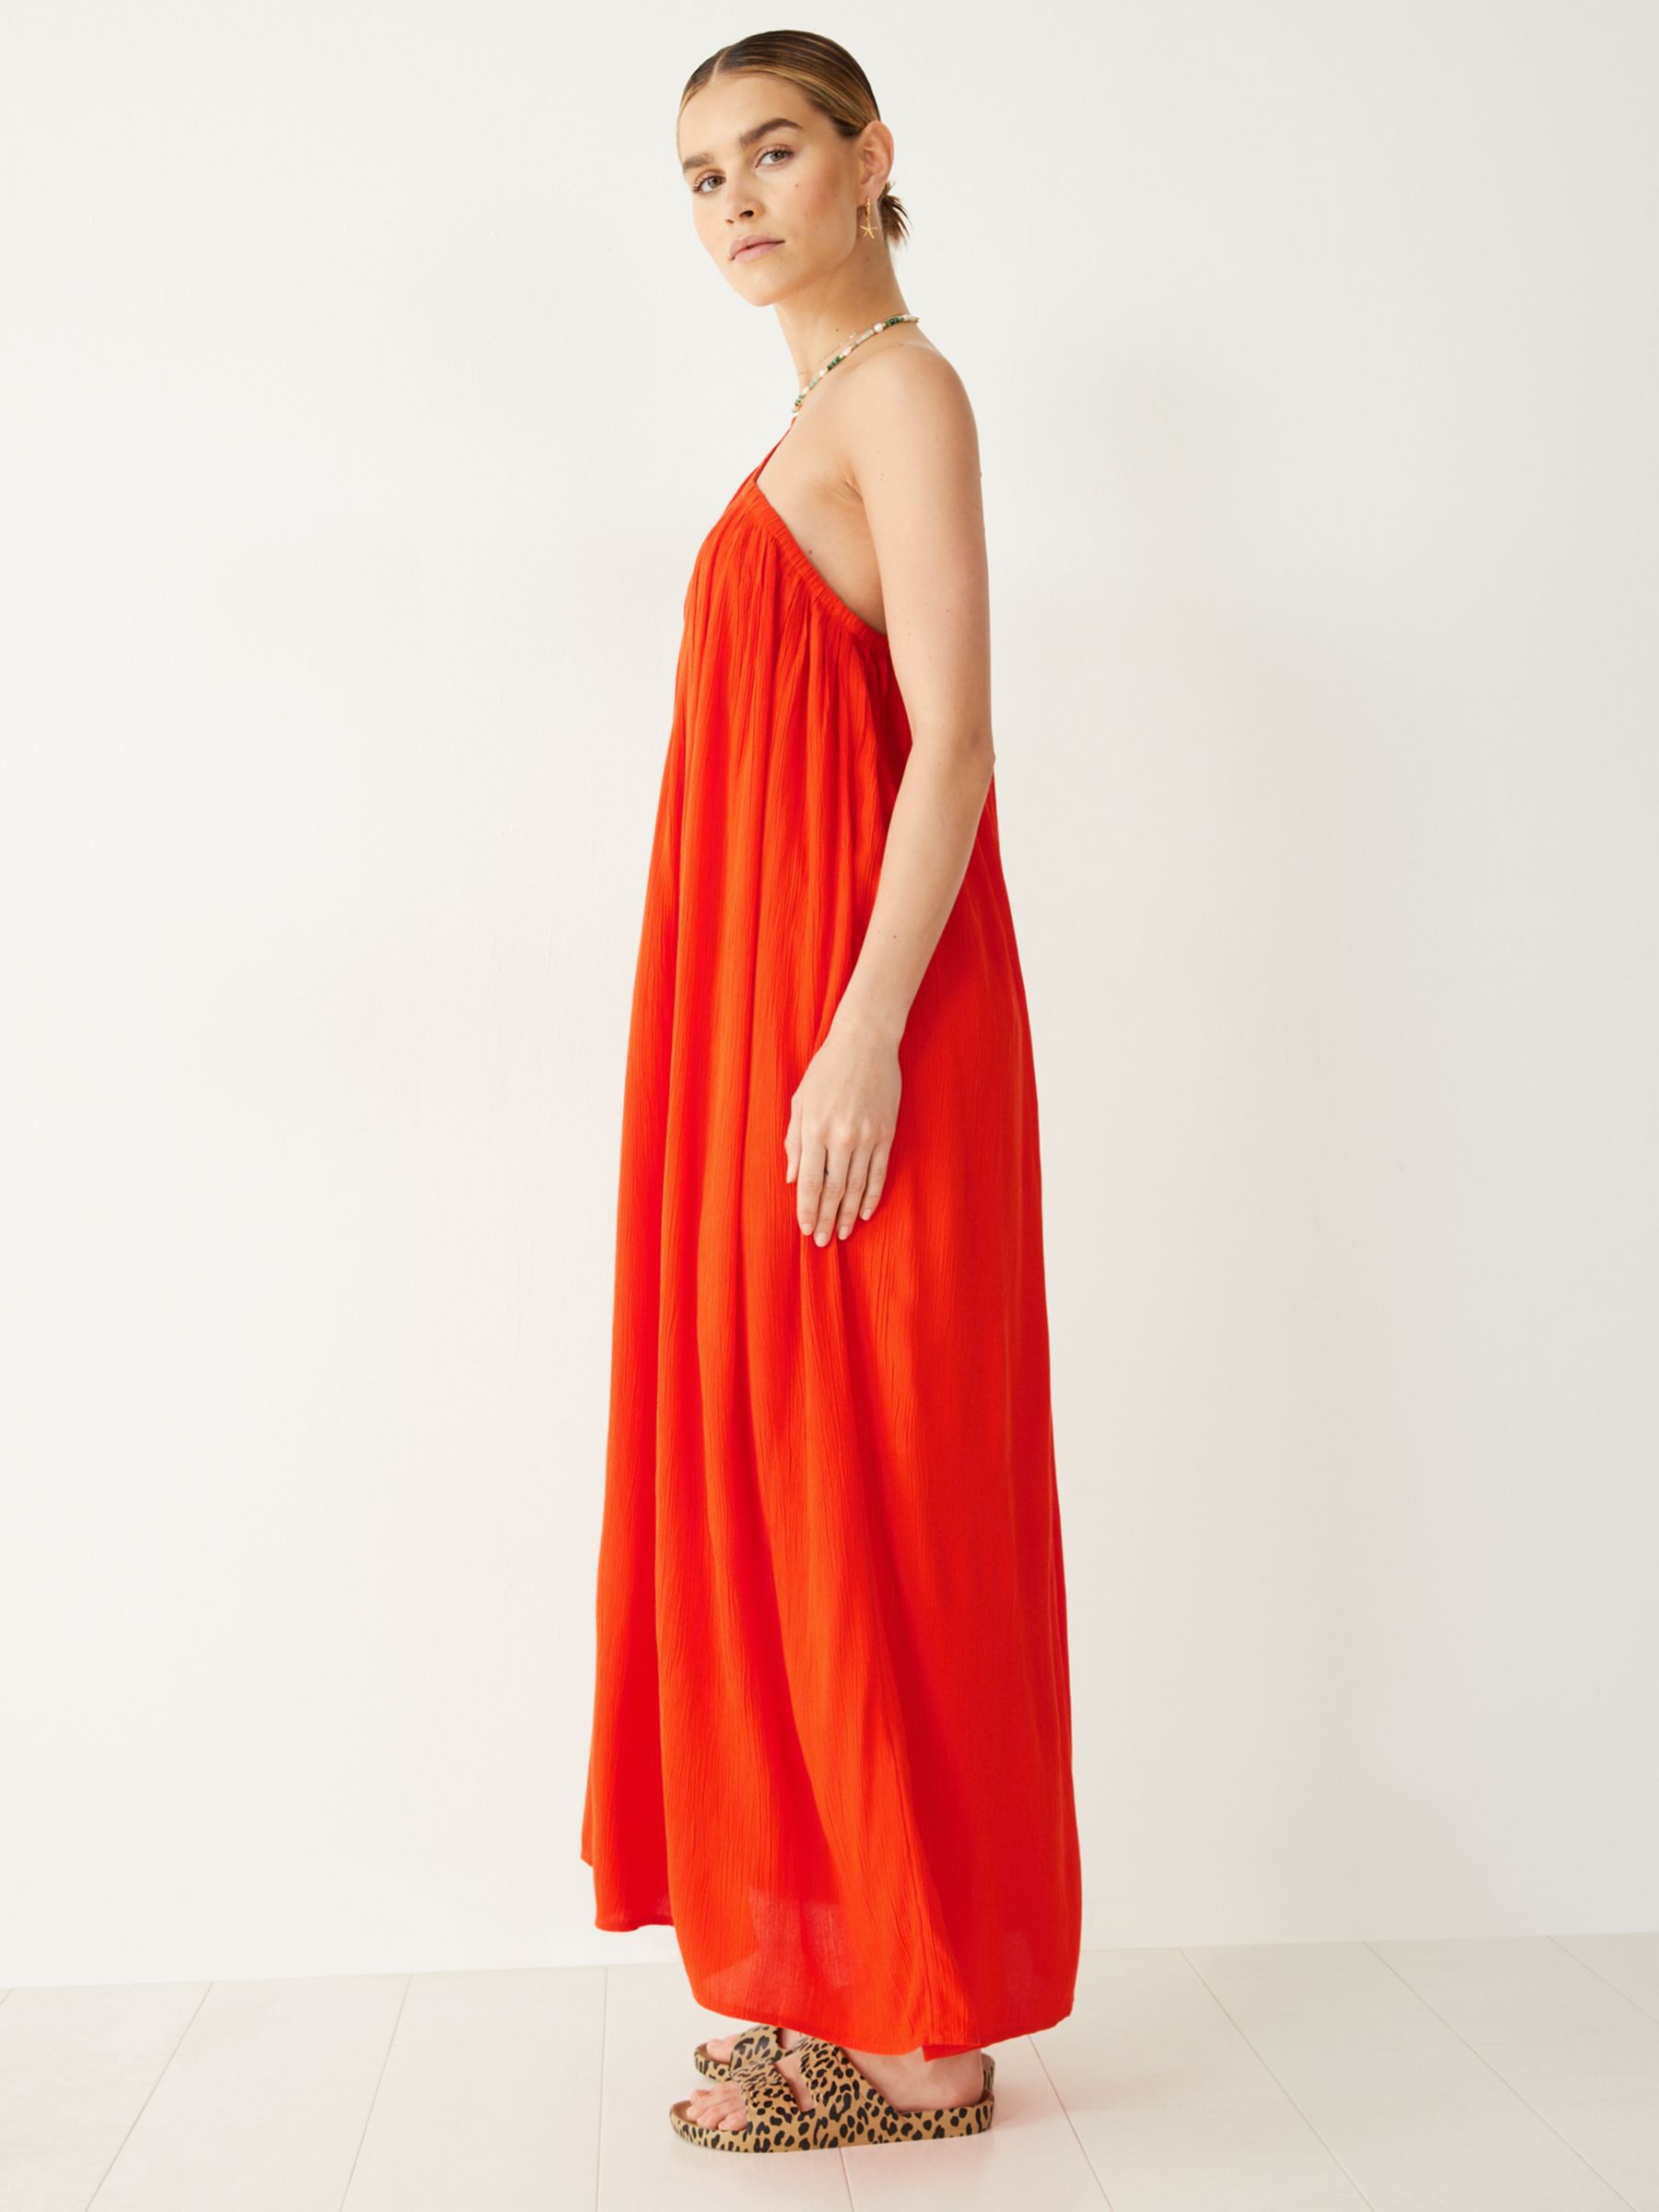 HUSH Bella Rose Asymmetric Dress, Tangerine, 12